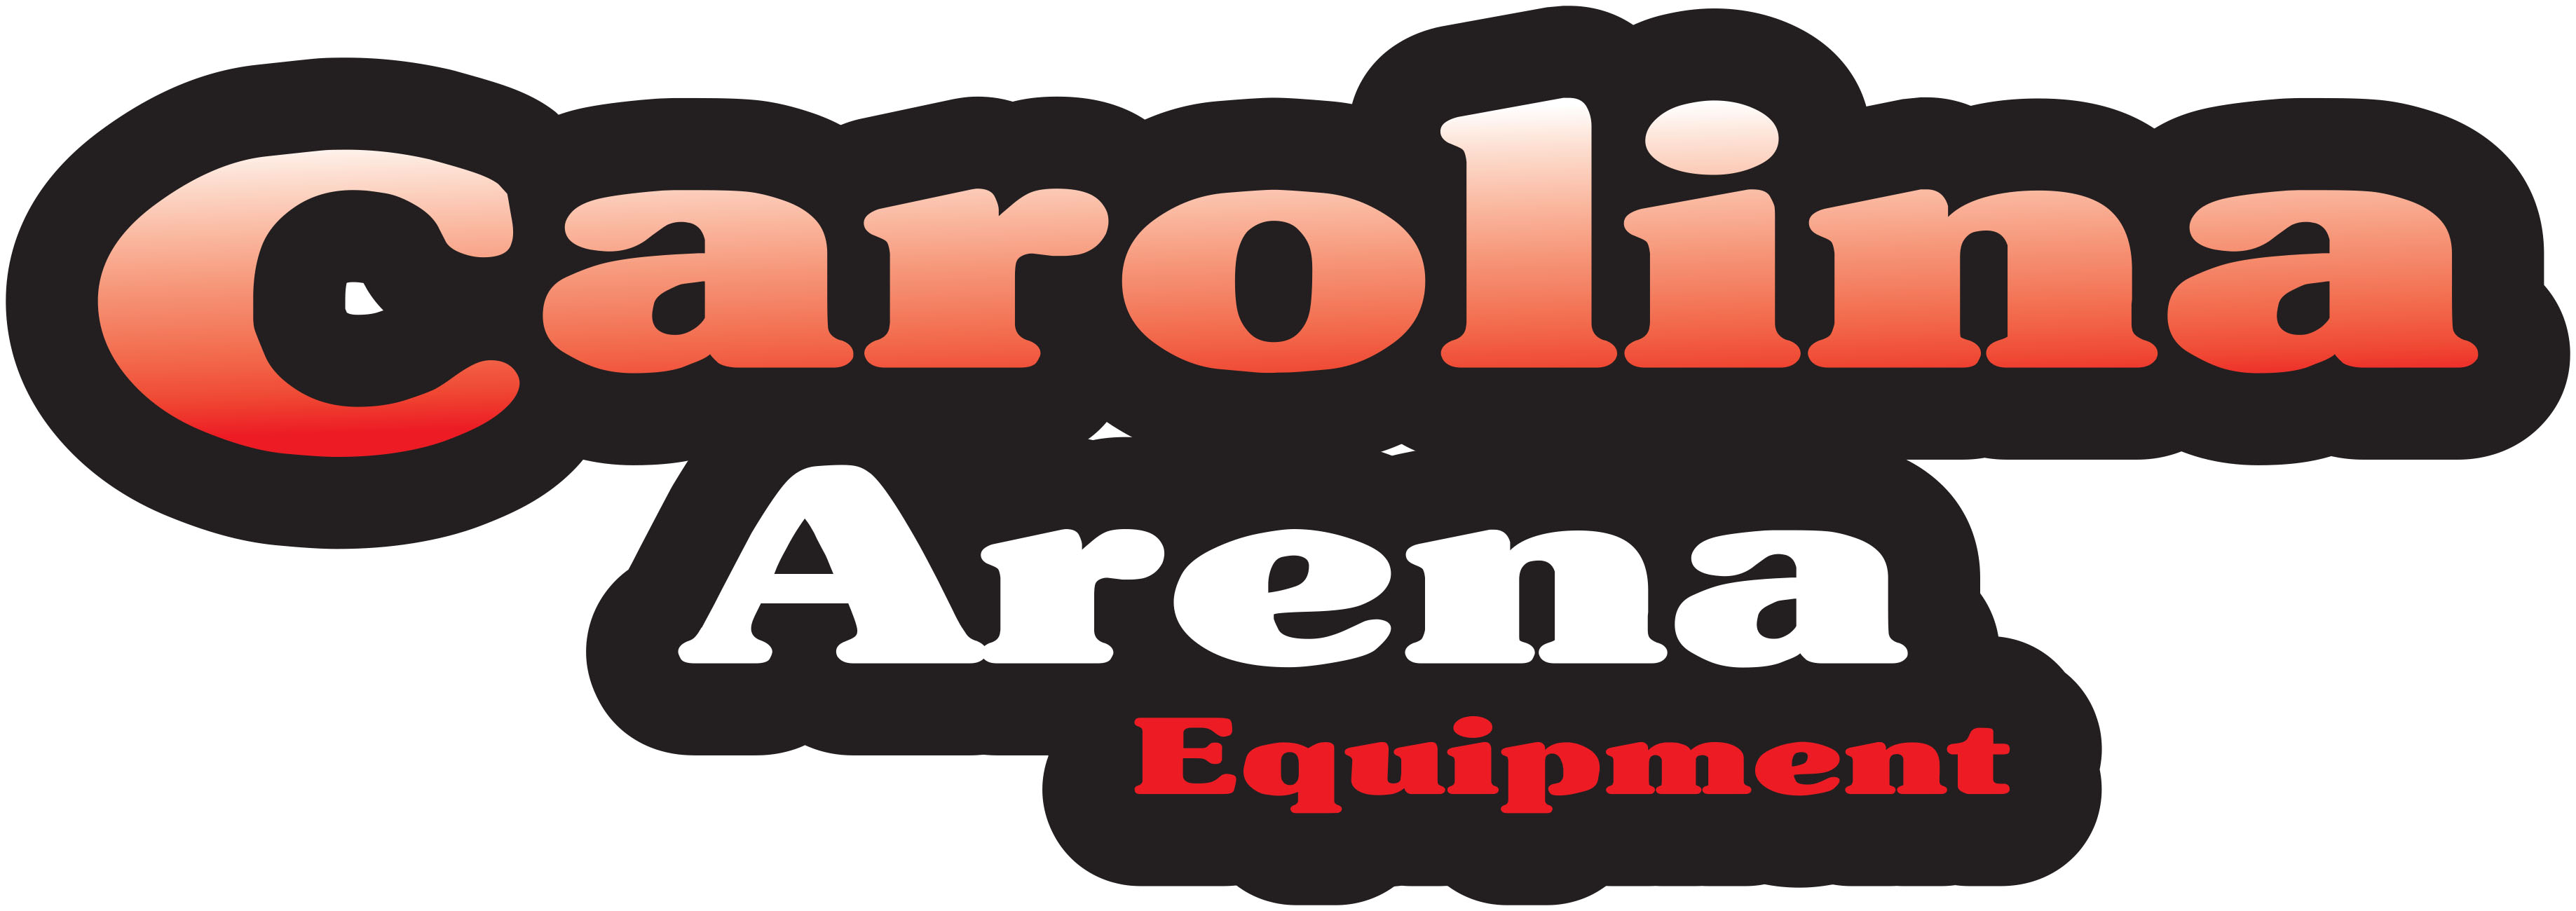 Carolina Arena Equipment